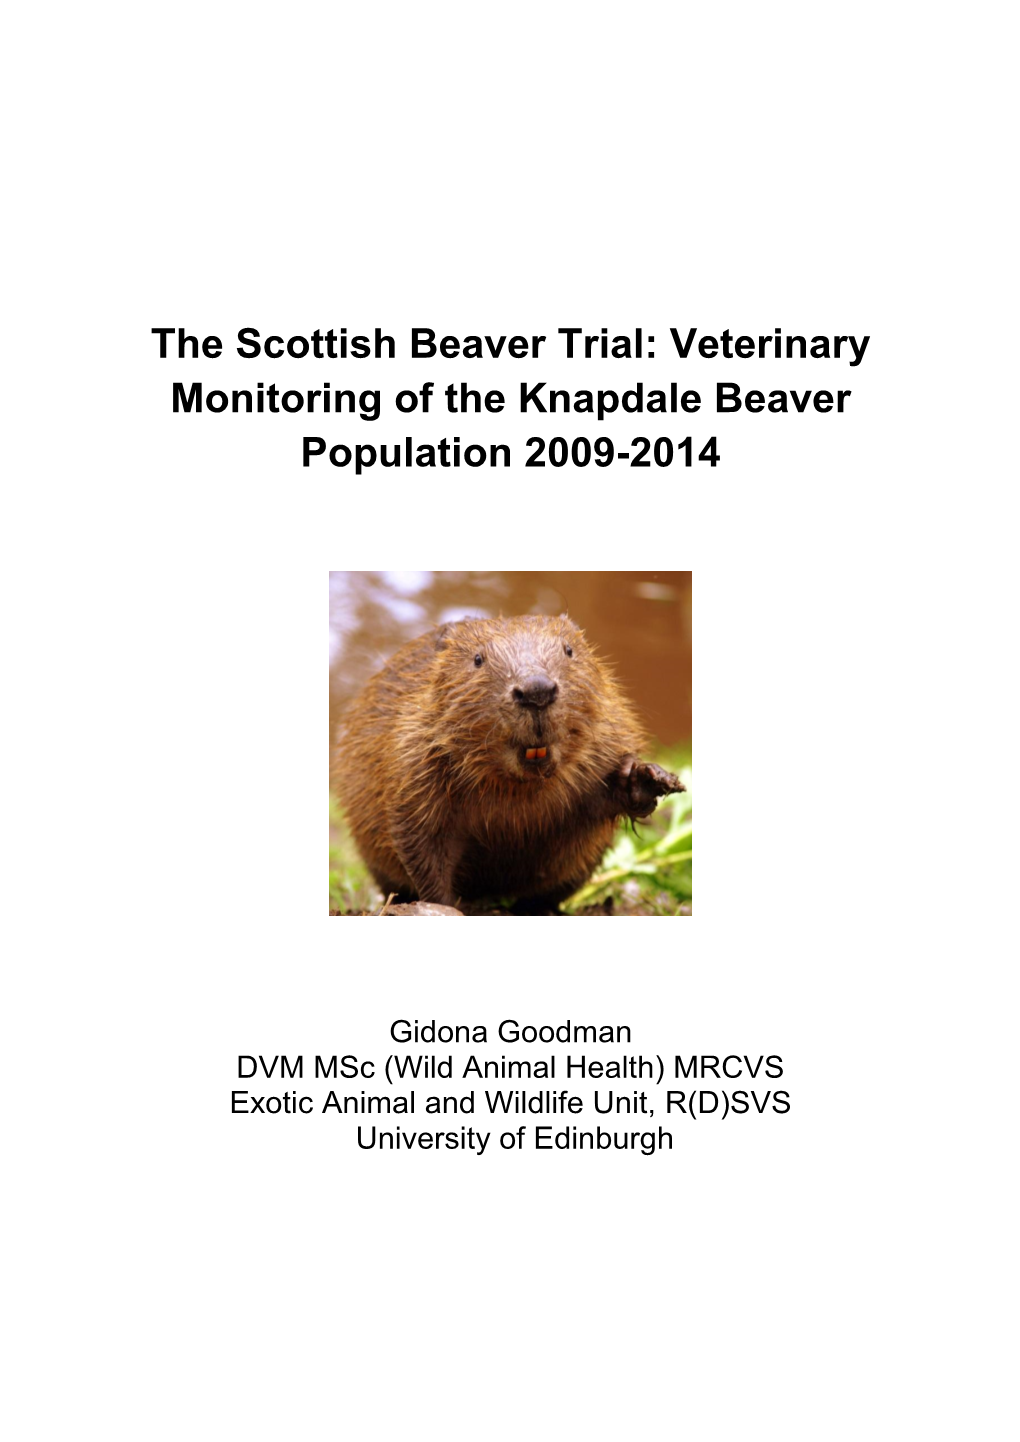 The Scottish Beaver Trial: Veterinary Monitoring of the Knapdale Beaver Population 2009-2014